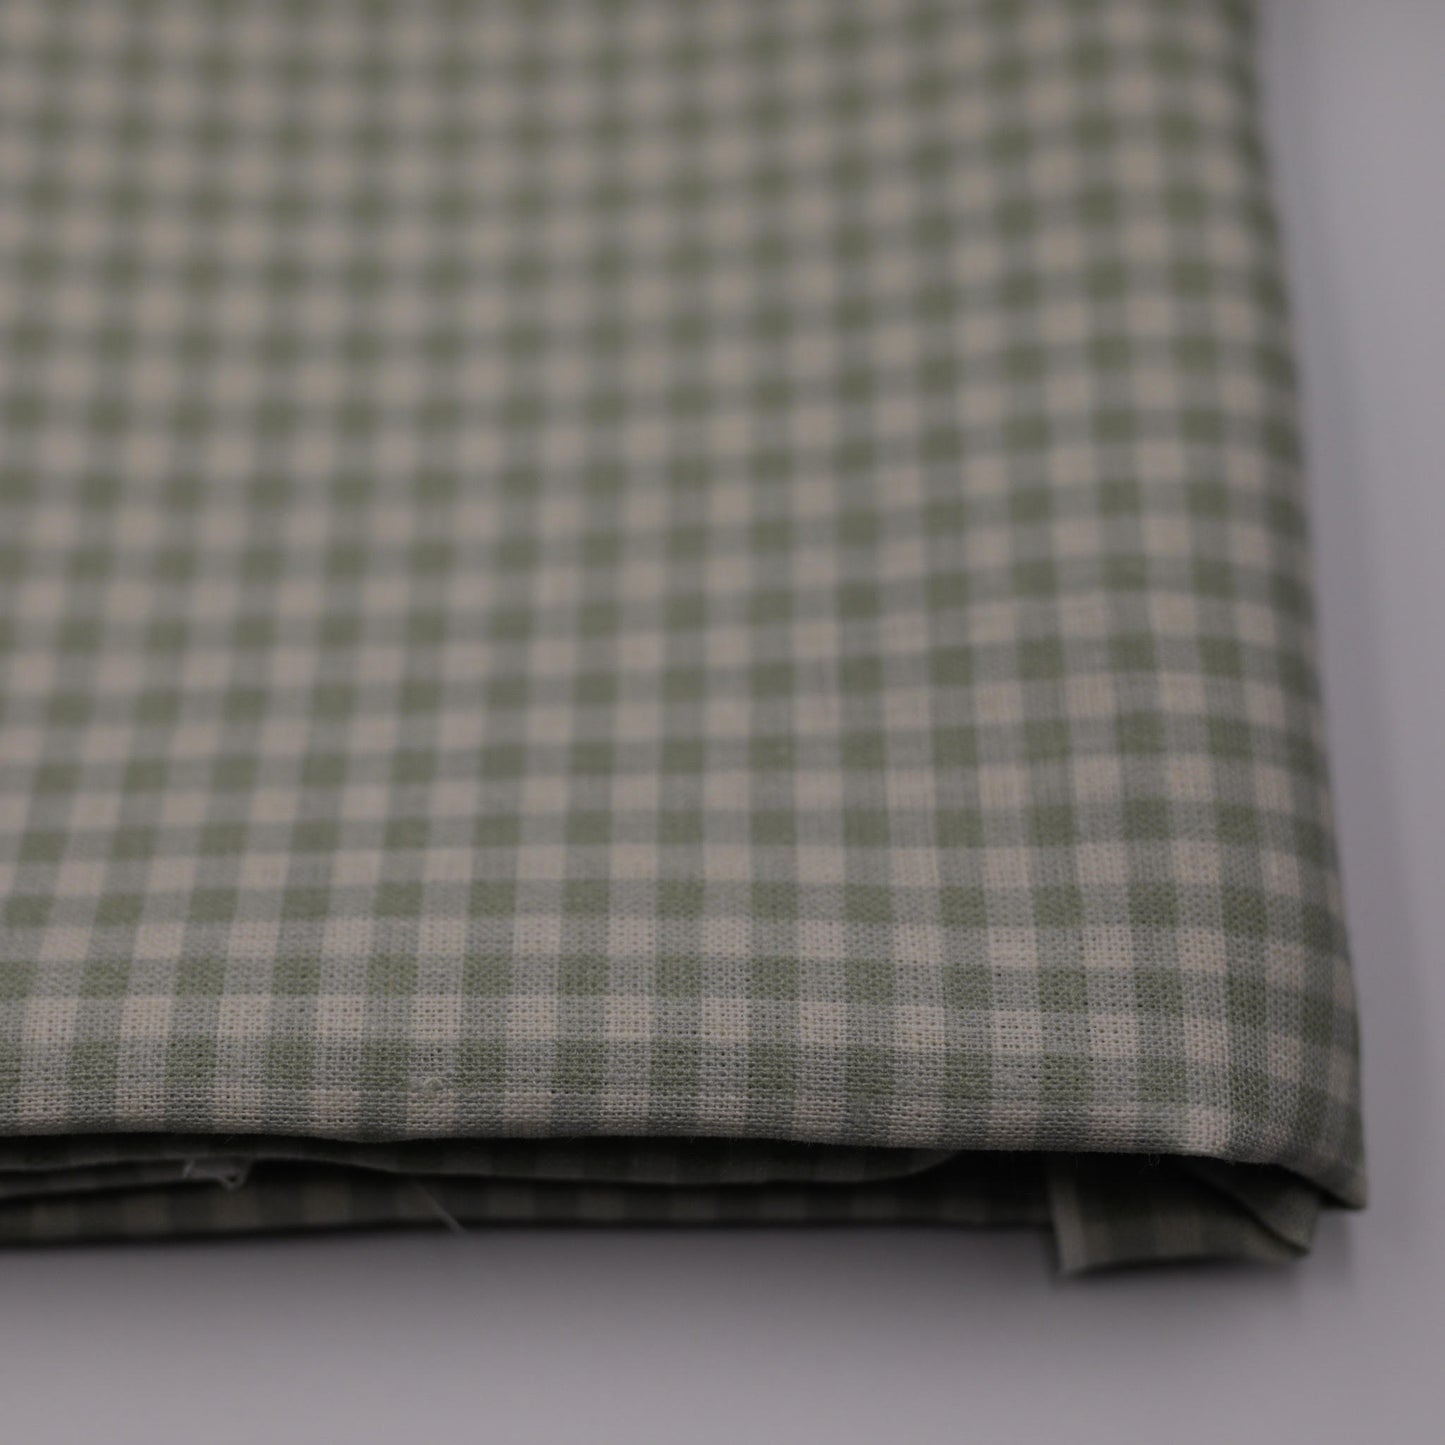 Mint gingham 0.5 cm 100% linen fabric 006